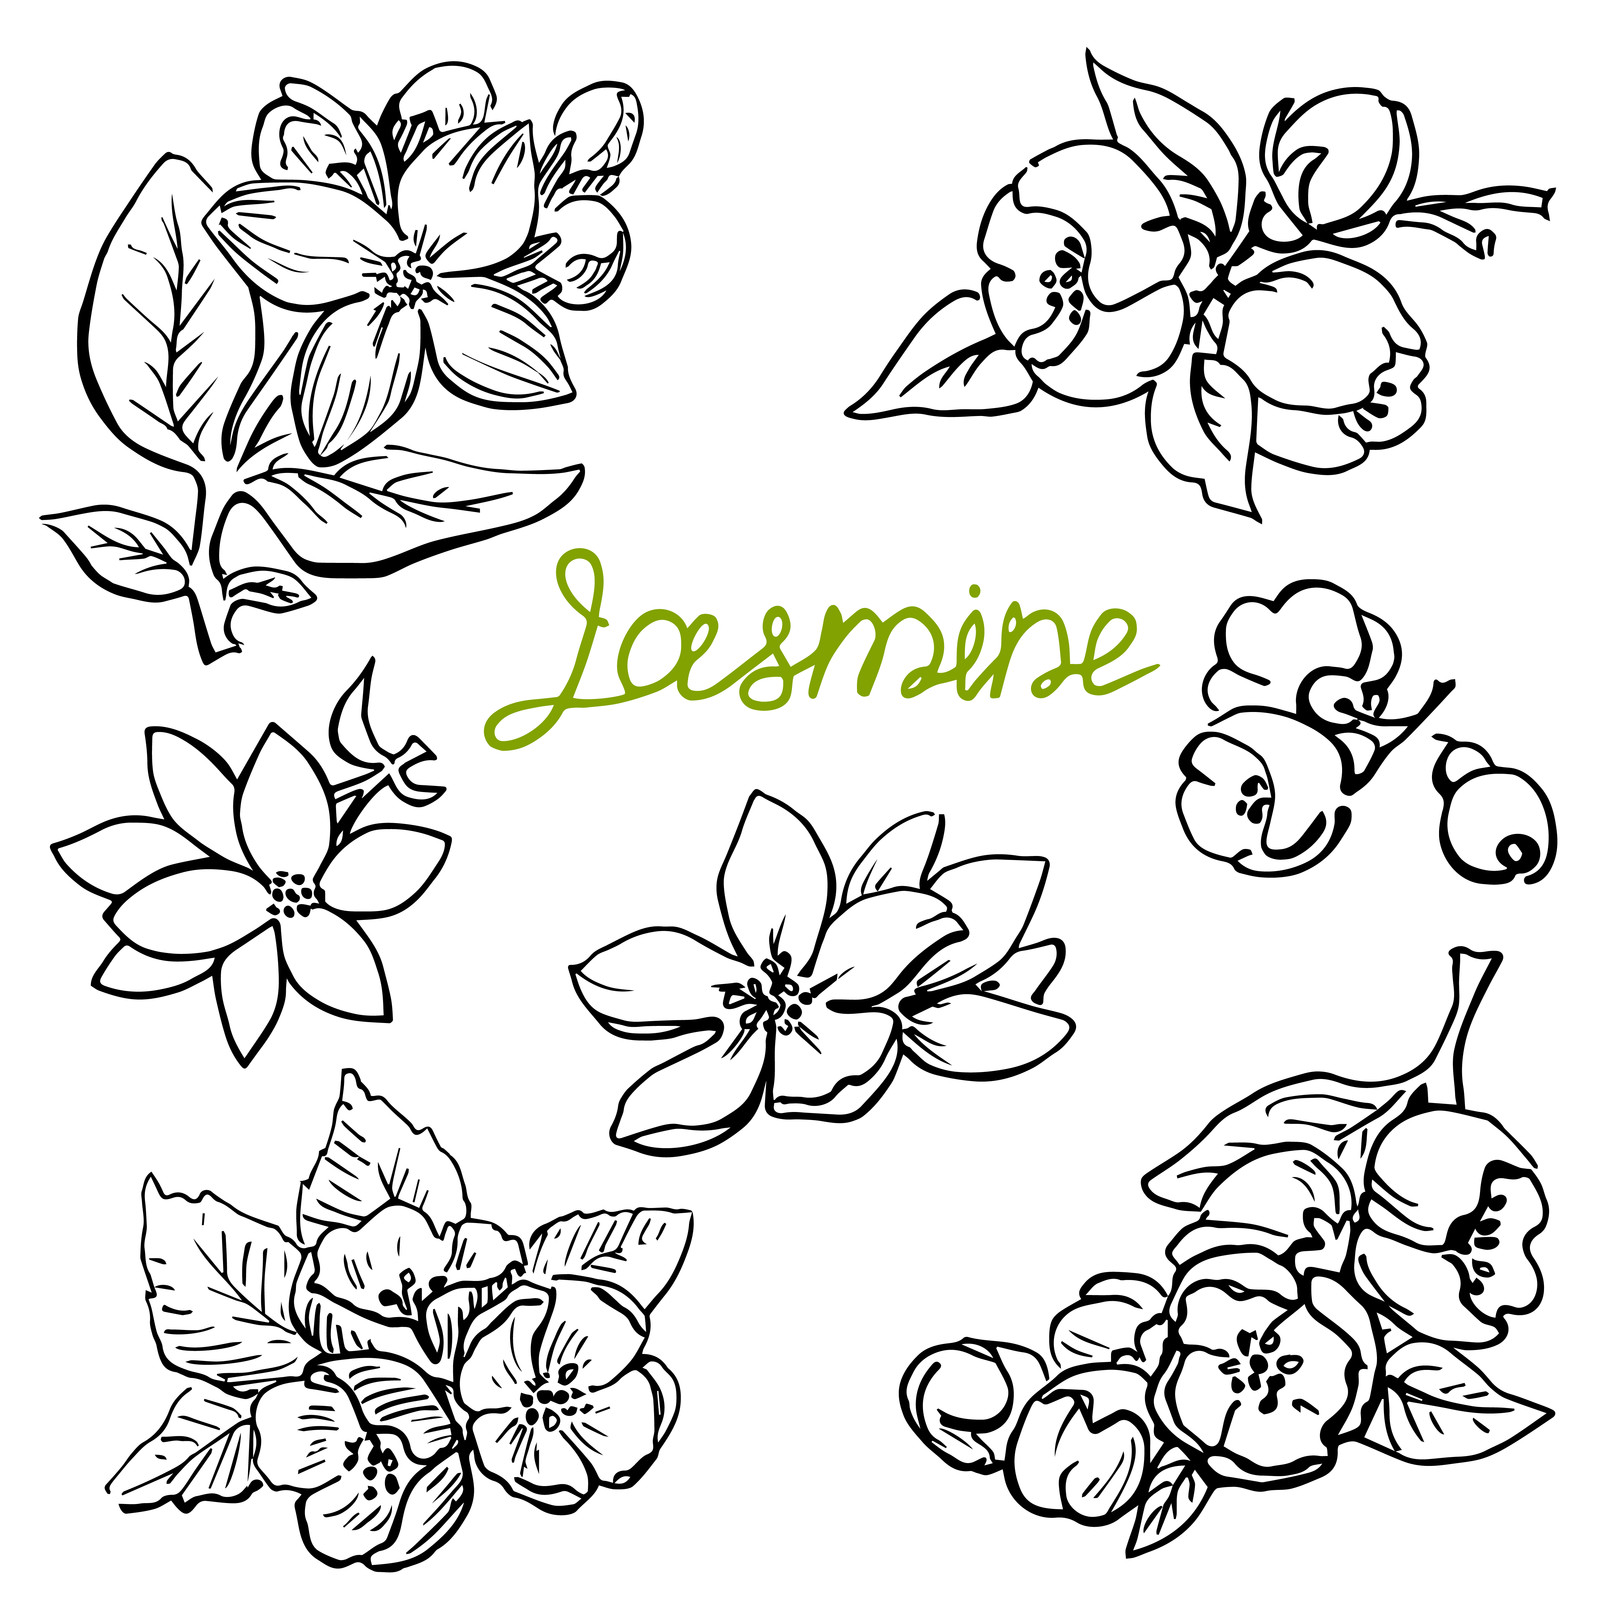 Jasmine flowers,hand drawn sketch.